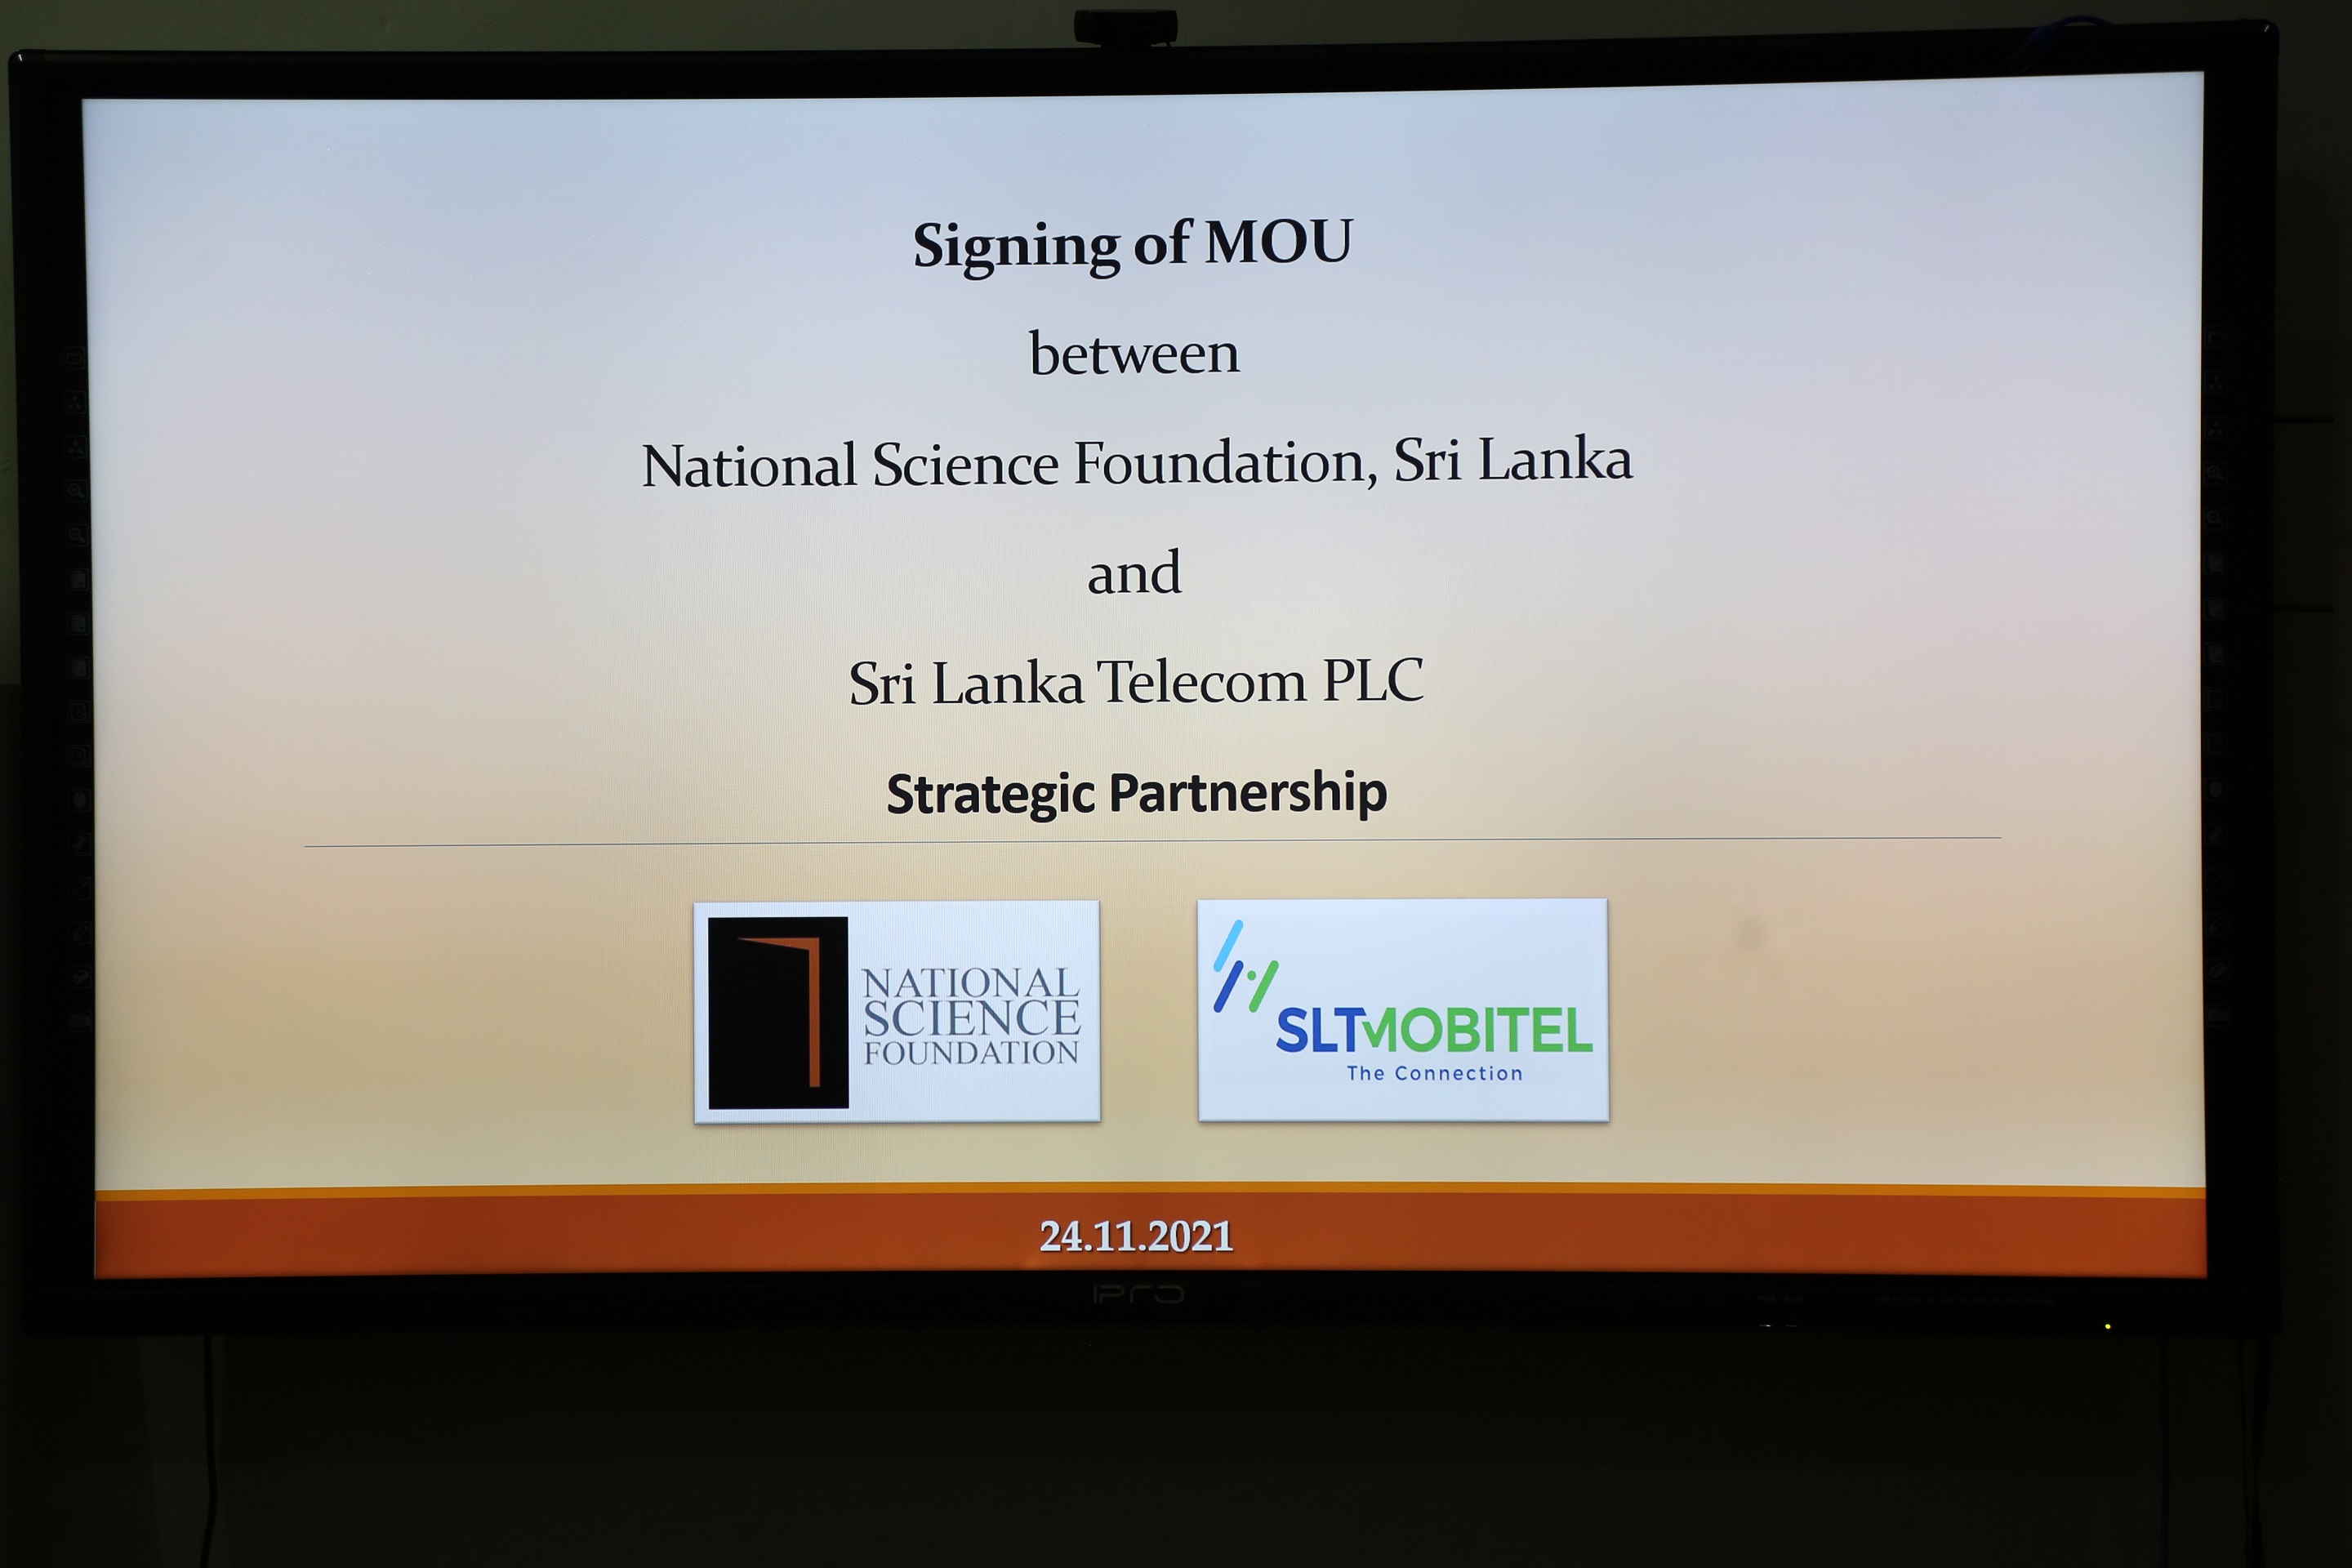 NSF enters into strategic partnership with SLT